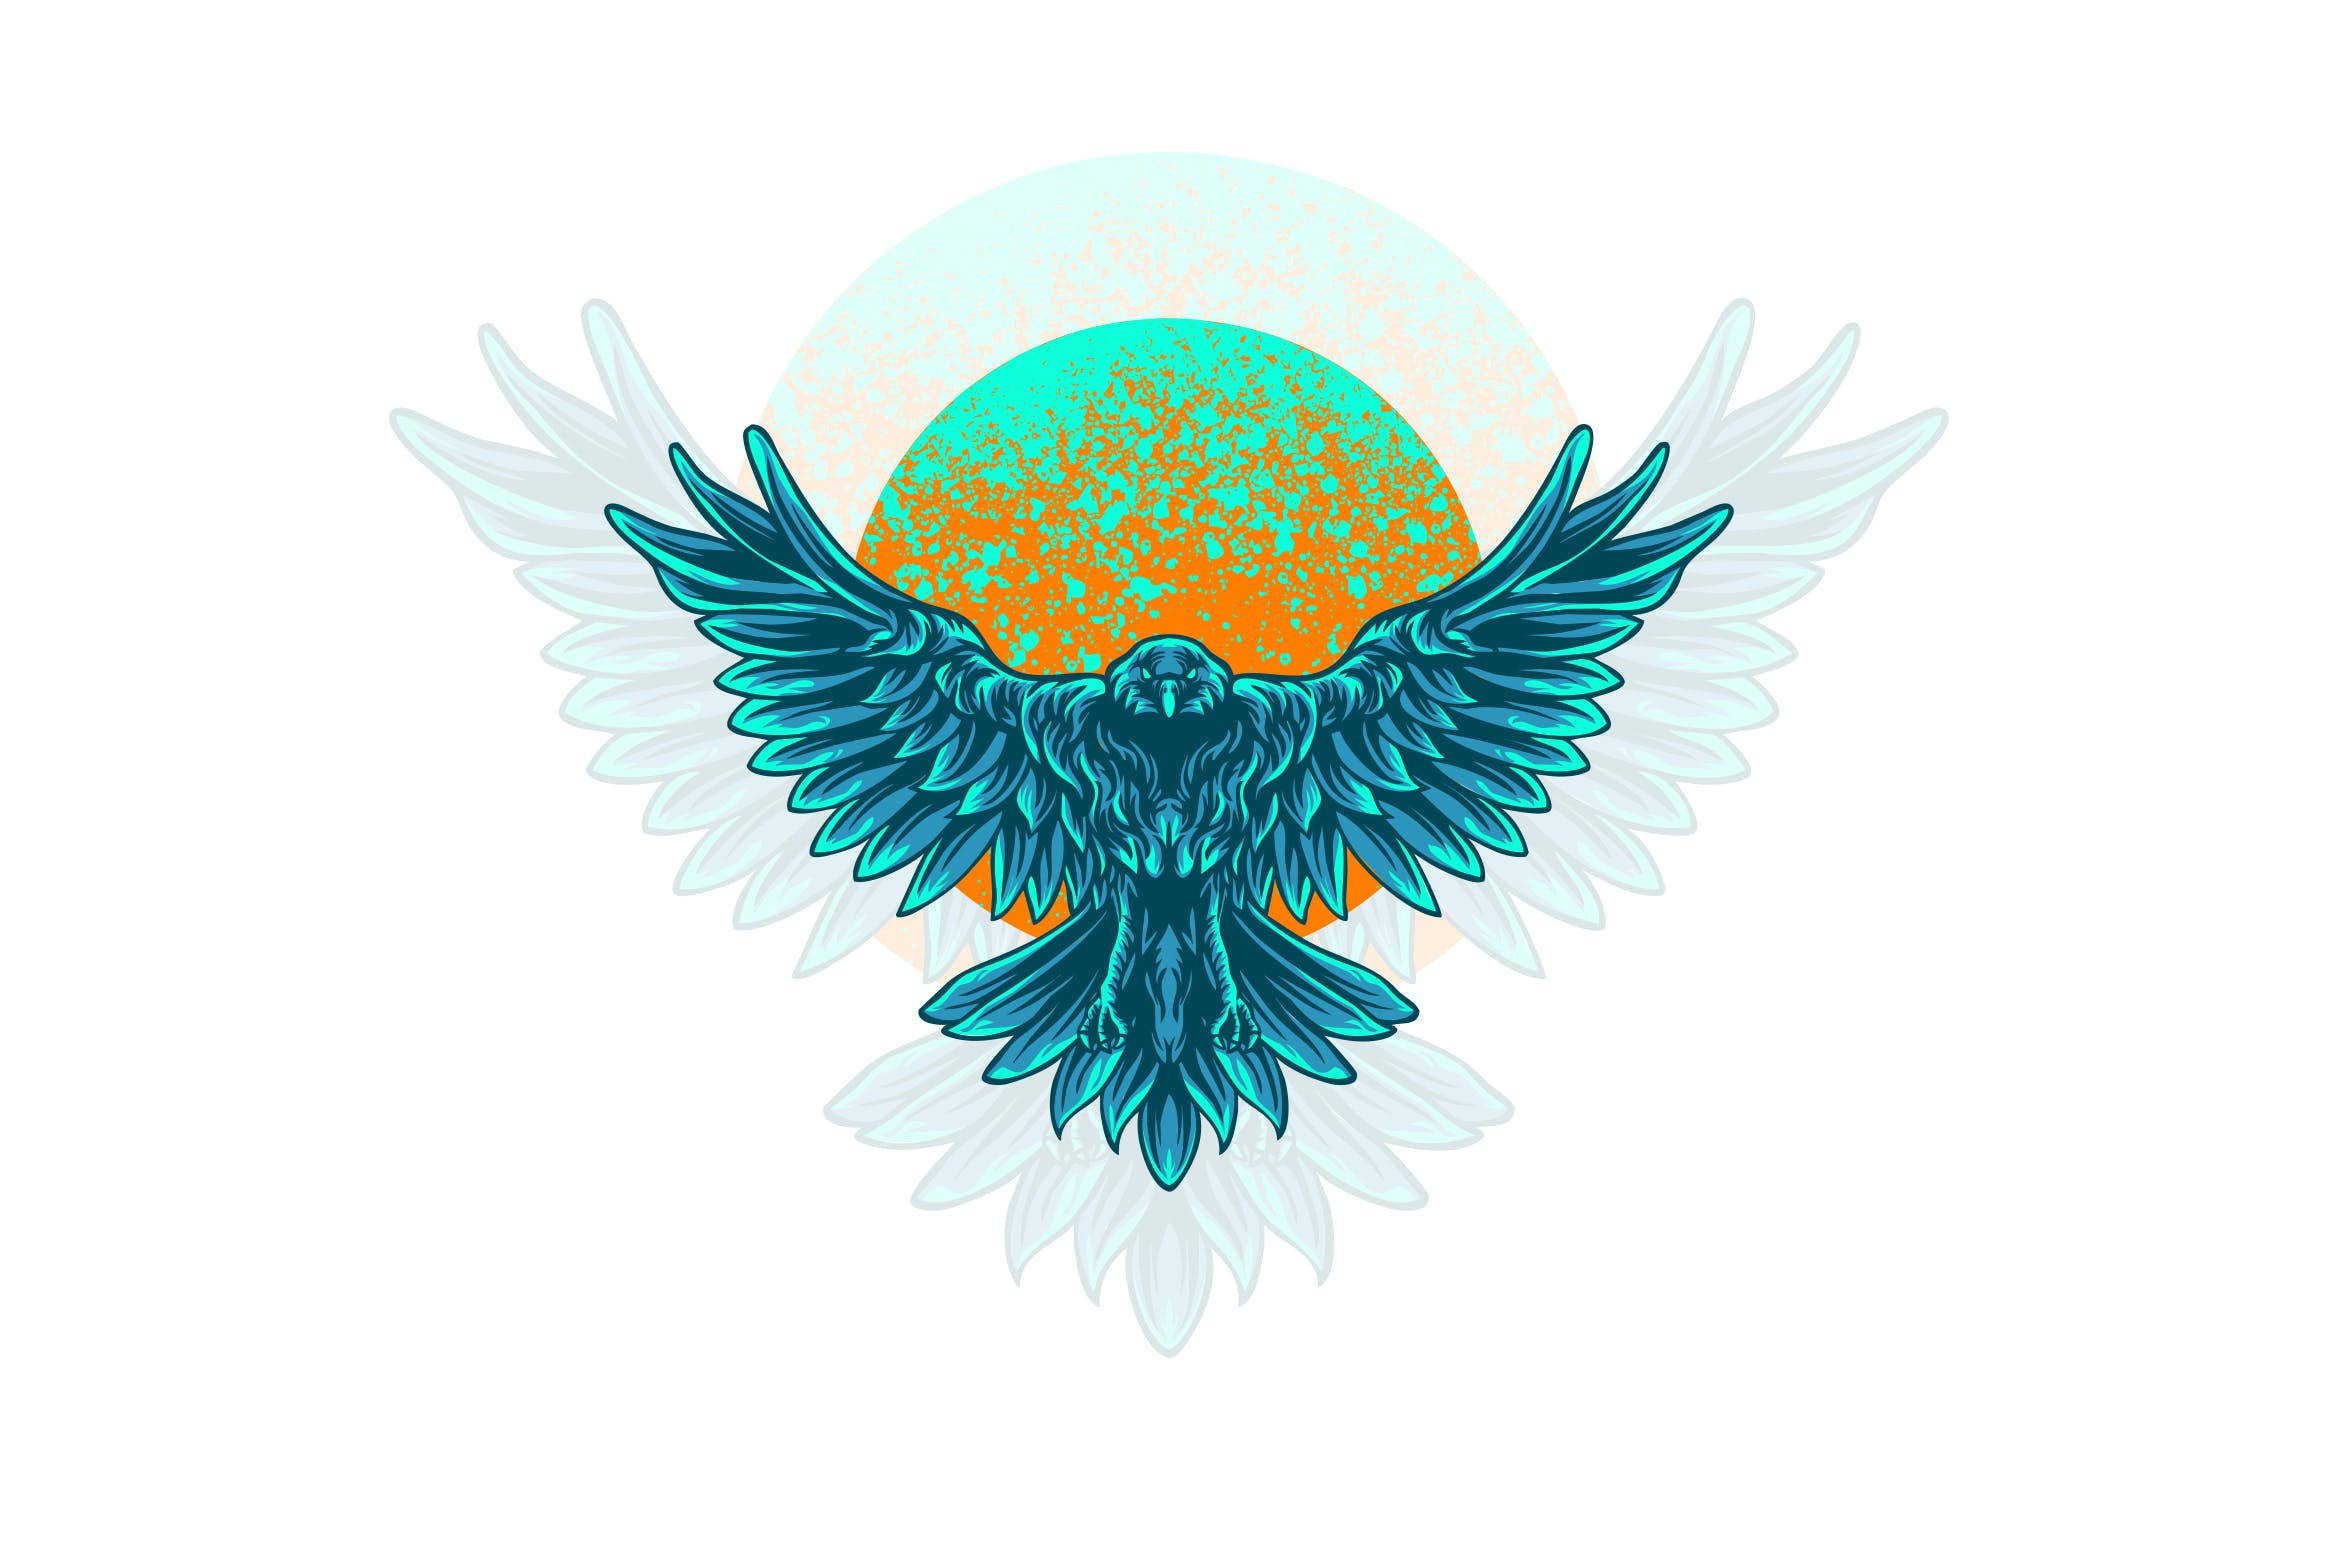 展翅乌鸦动物徽章插画 raven animal illustration 图片素材 第1张